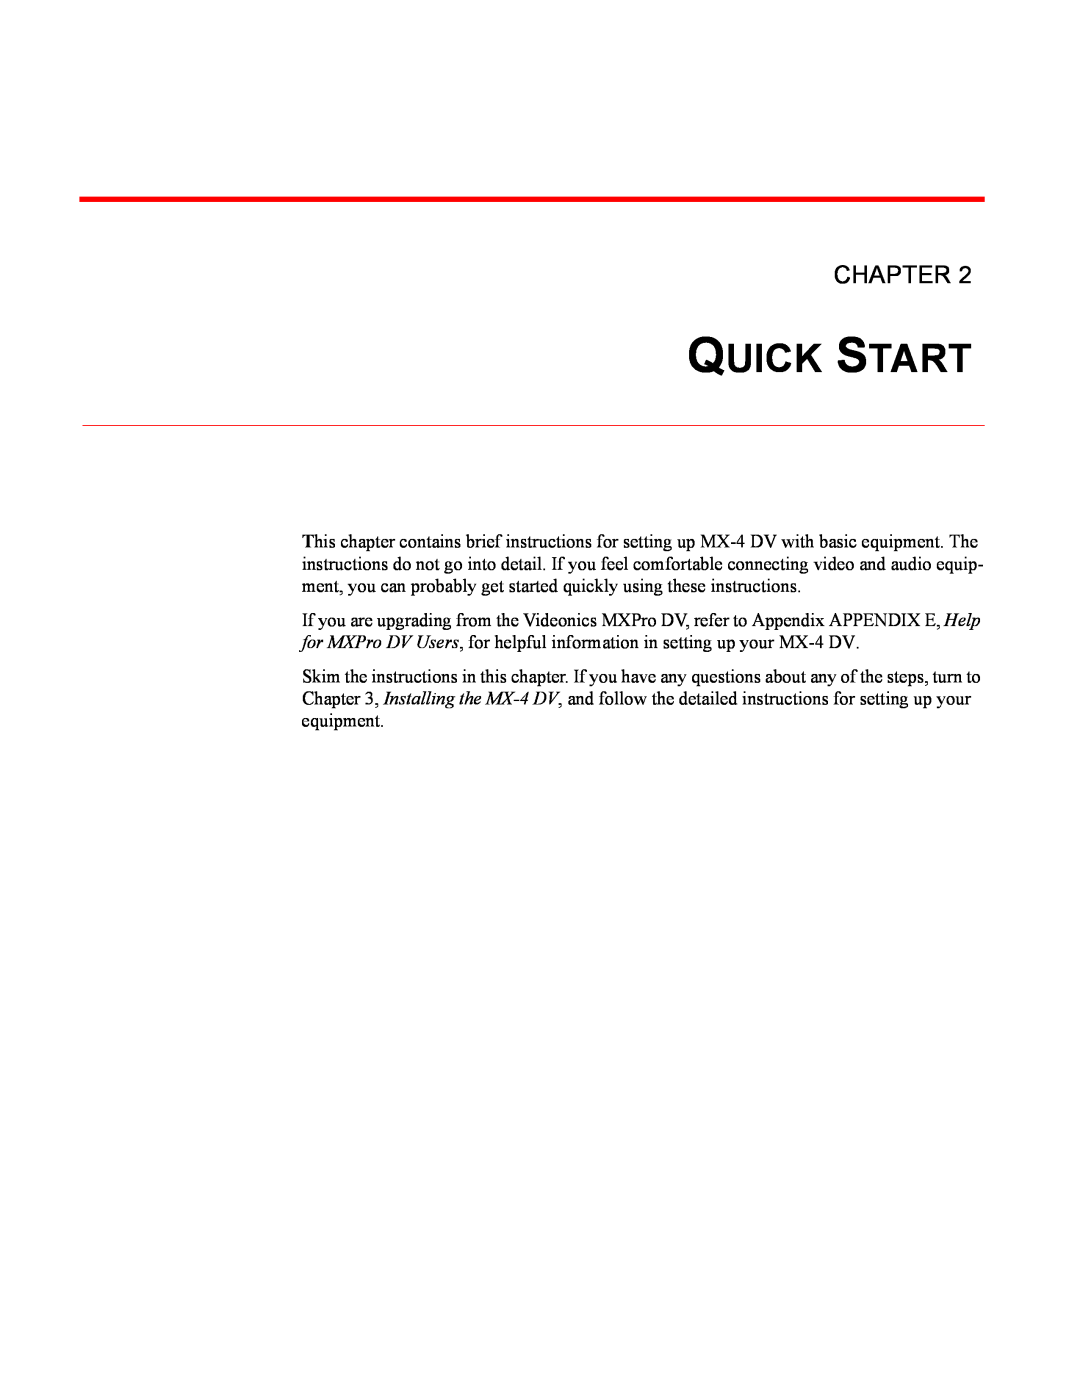 FOCUS Enhancements MX-4DV manual Quick Start, Chapter 